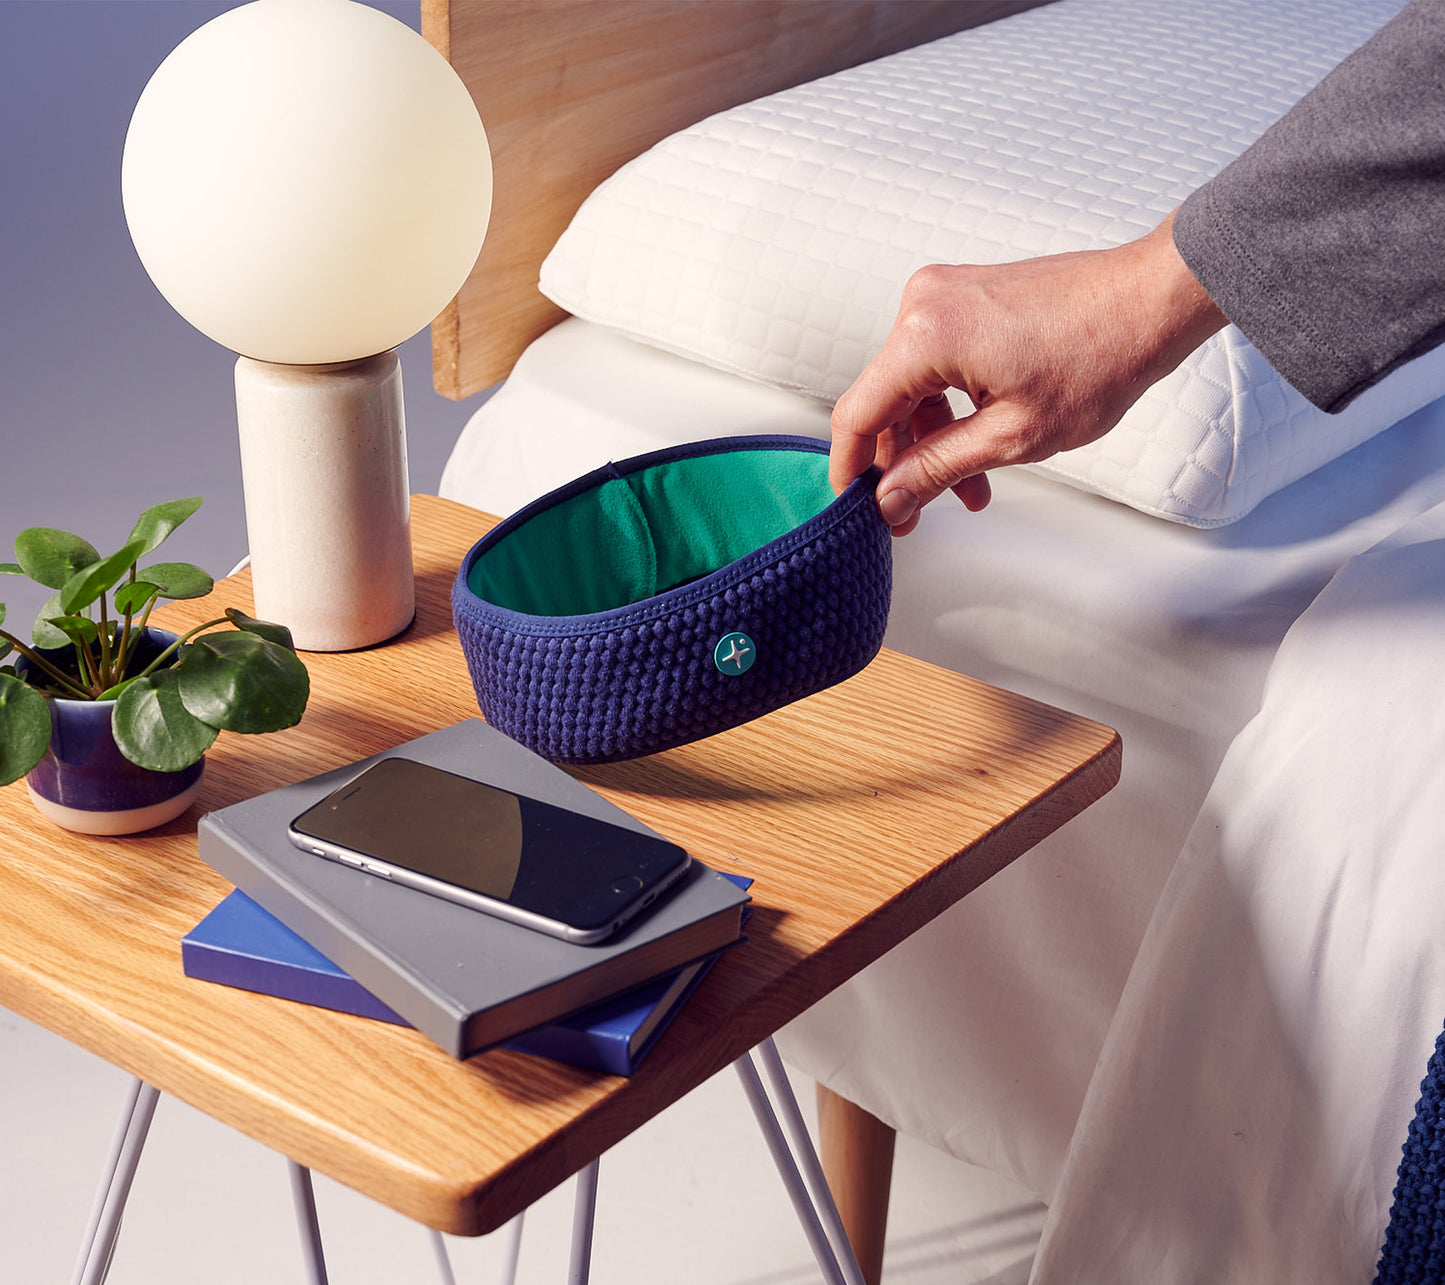 Hoomband - Diadema sin cables Bluetooth para dormir